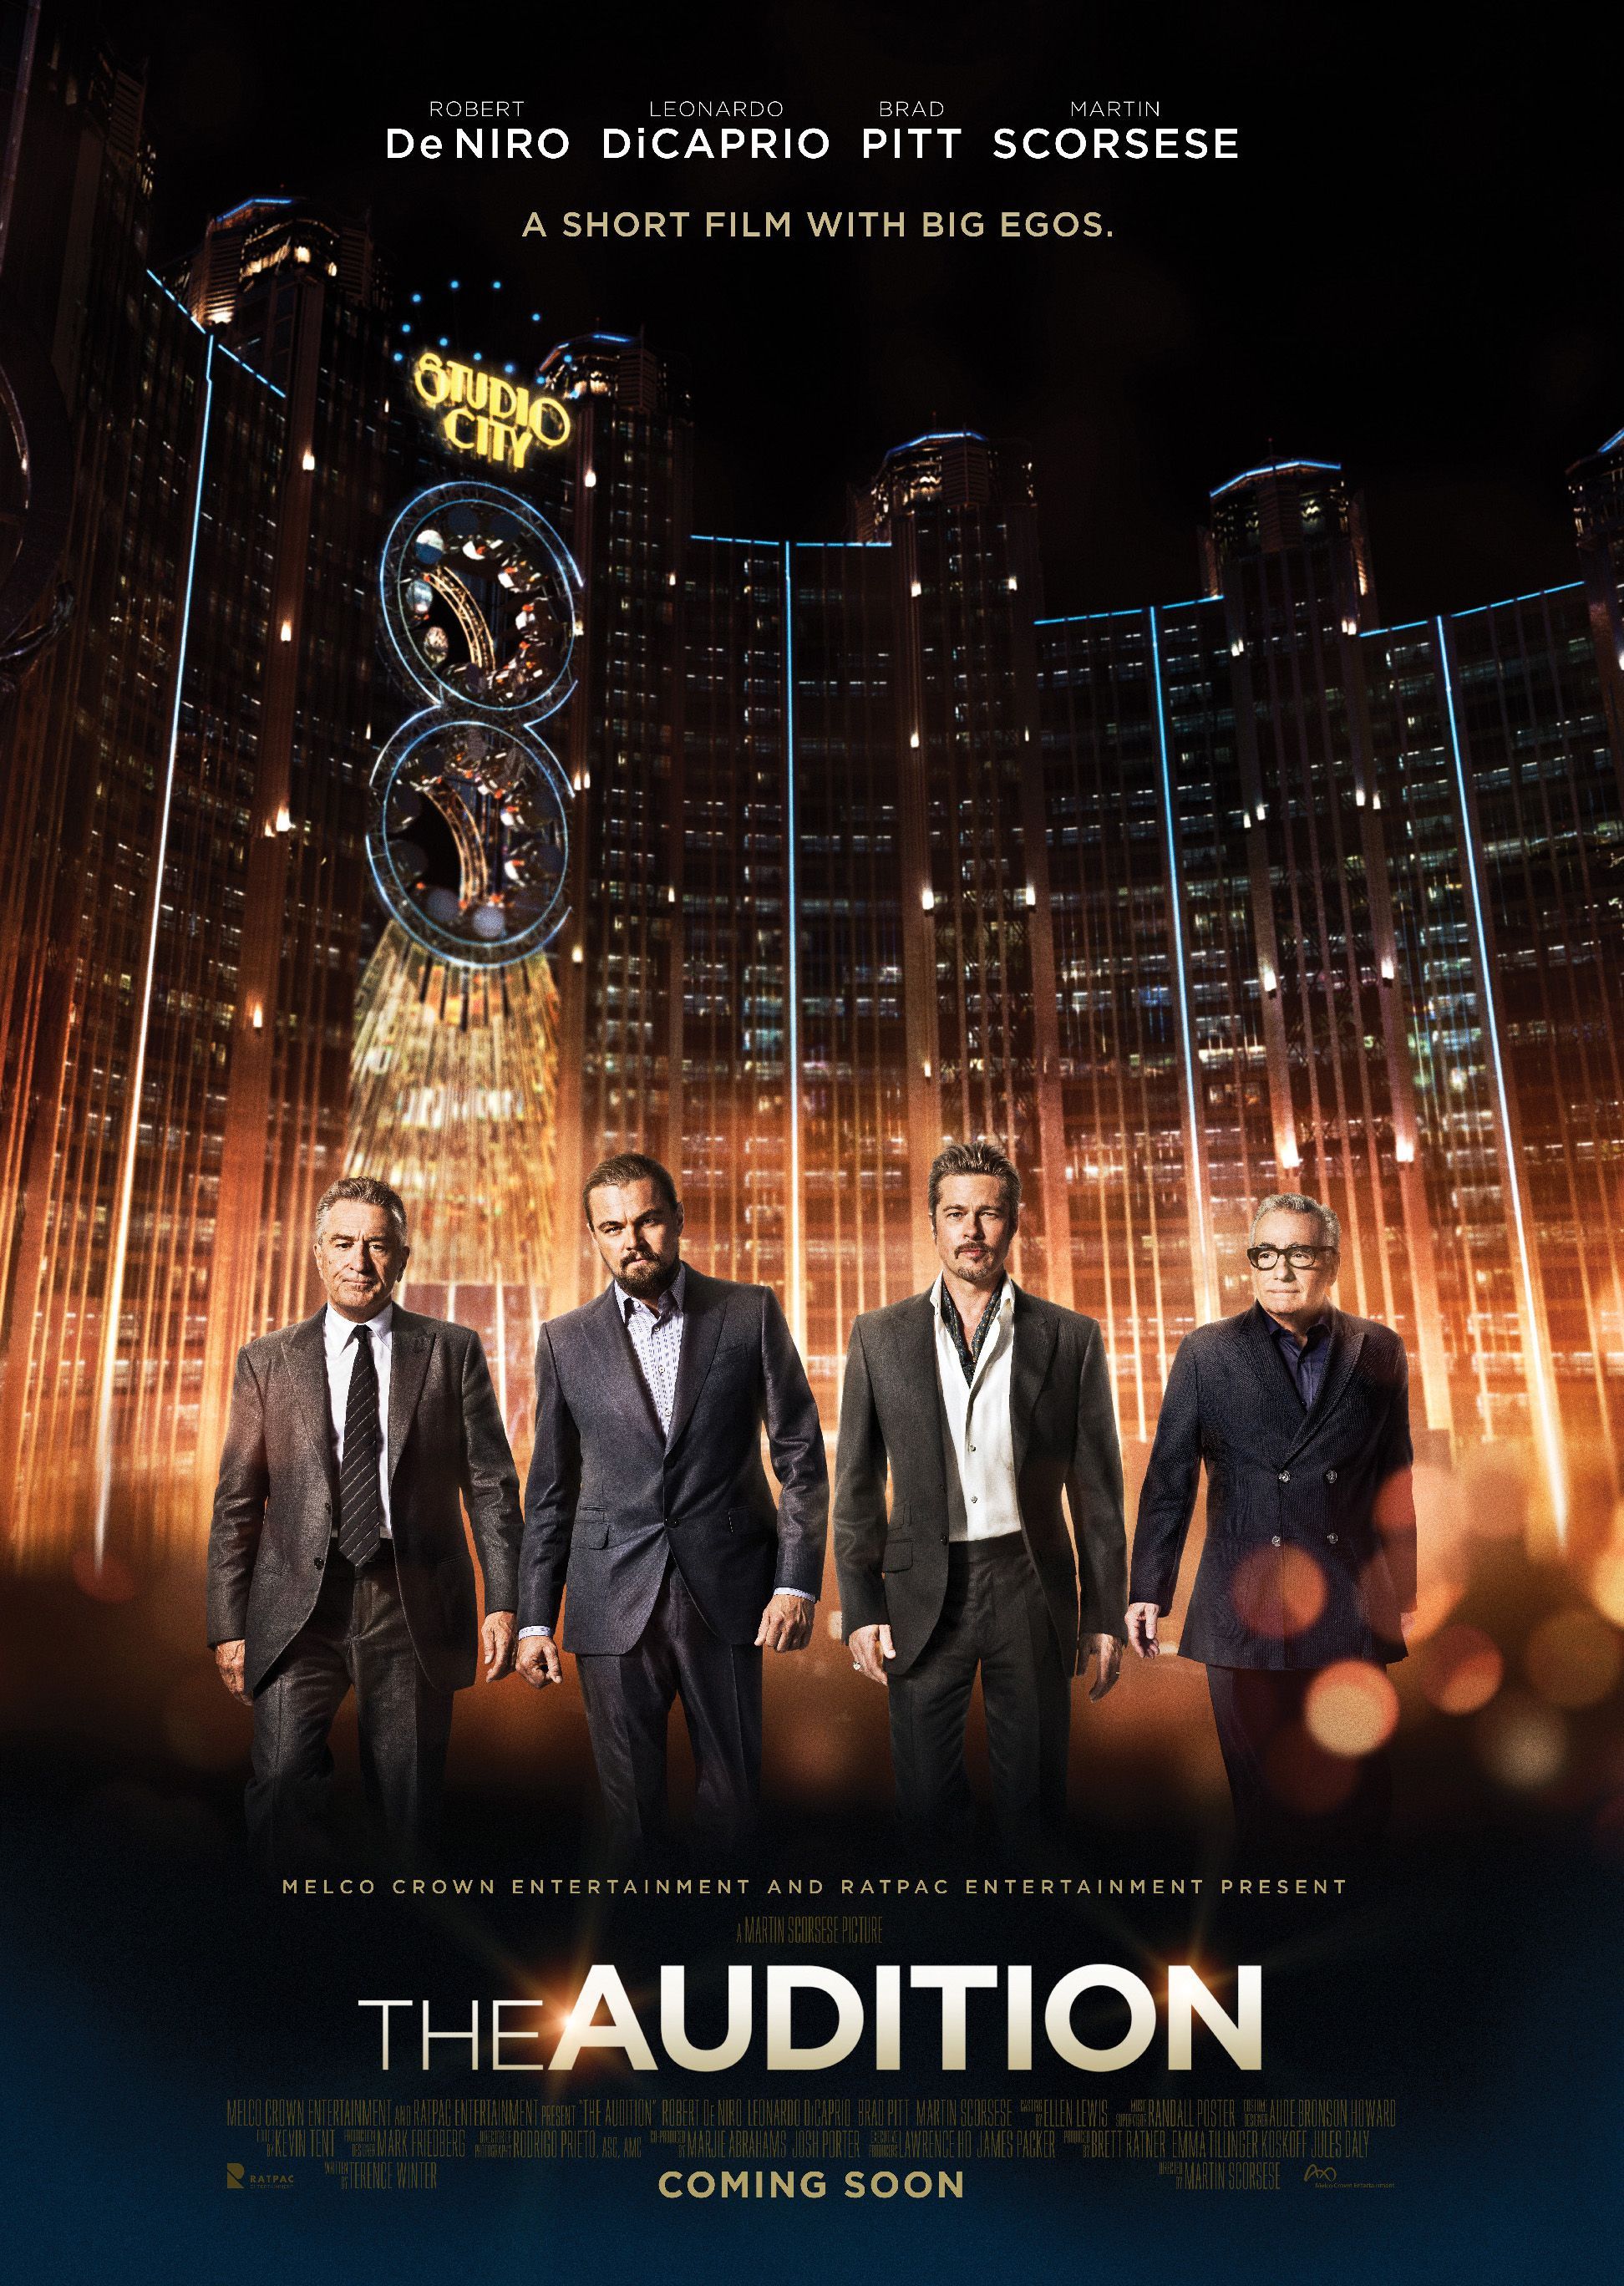 Brad Pitt, Robert De Niro, Leonardo DiCaprio, and Martin Scorsese in The Audition (2015)